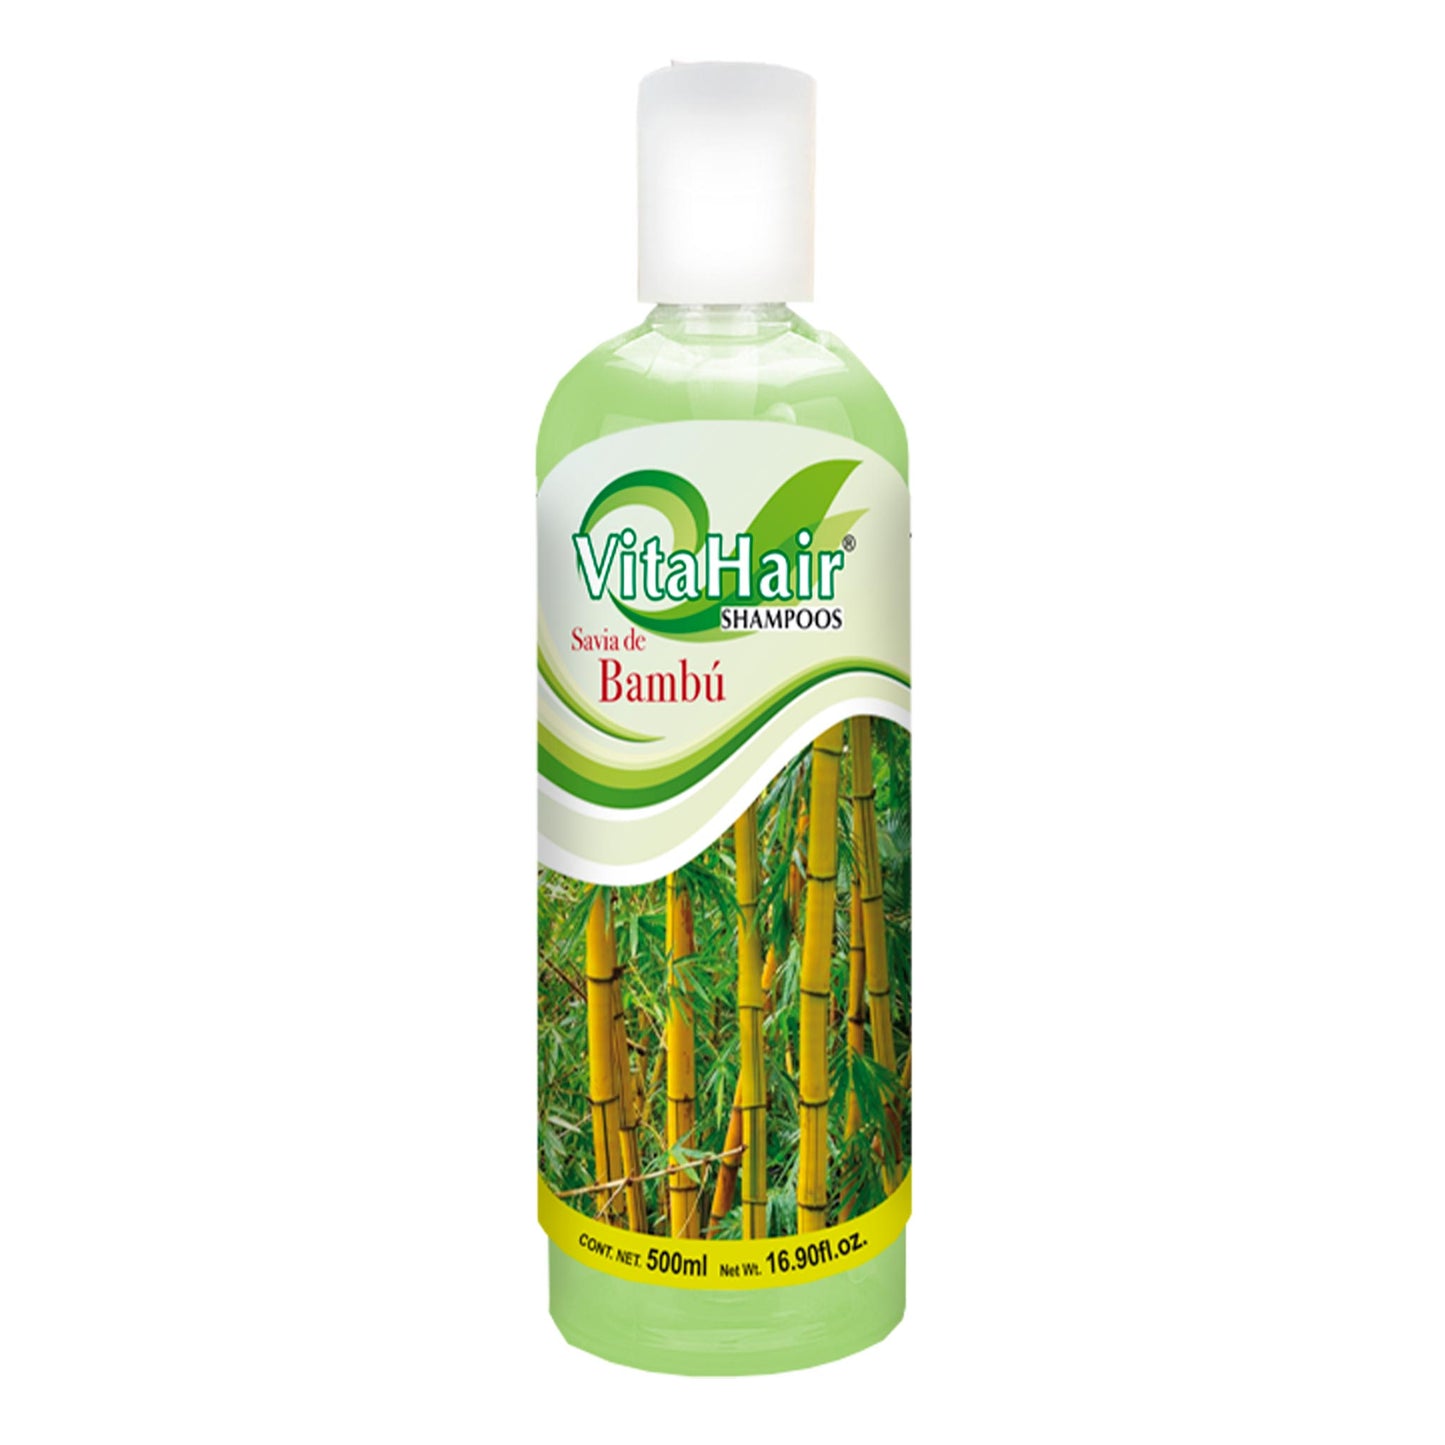 VITAHAIR ® shampoo de bambú chino 500ml